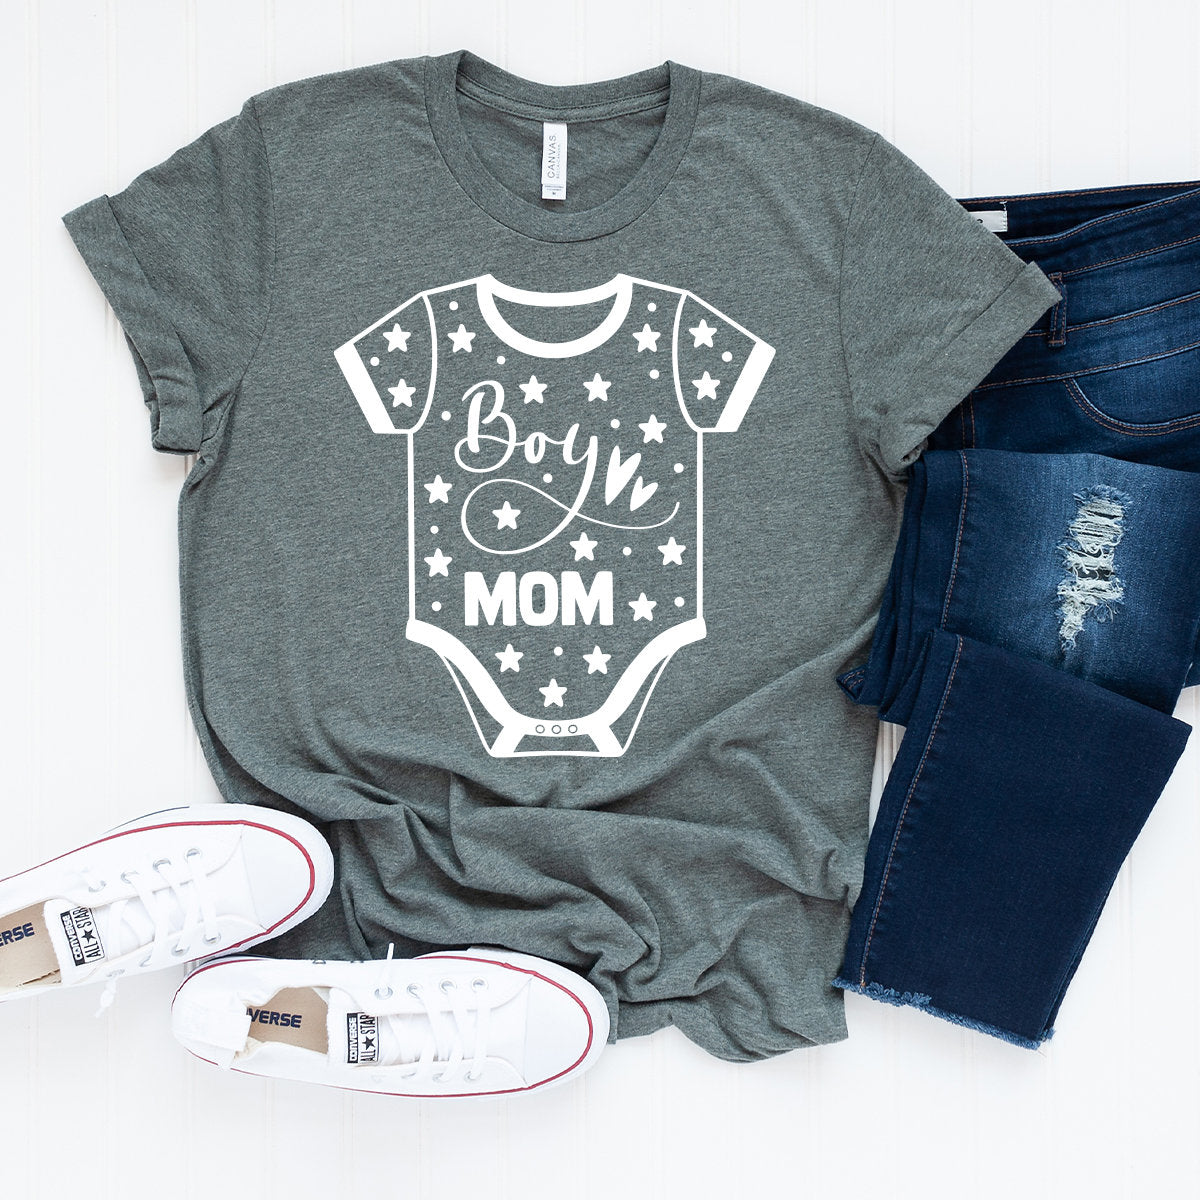 Mom Shirt - Mom Of Boys Shirt - Mom Life Shirt - Gift For Mom - Mommy Shirt  - Funny Mom Shirt - Shirts For Moms - Mothers Day Gift